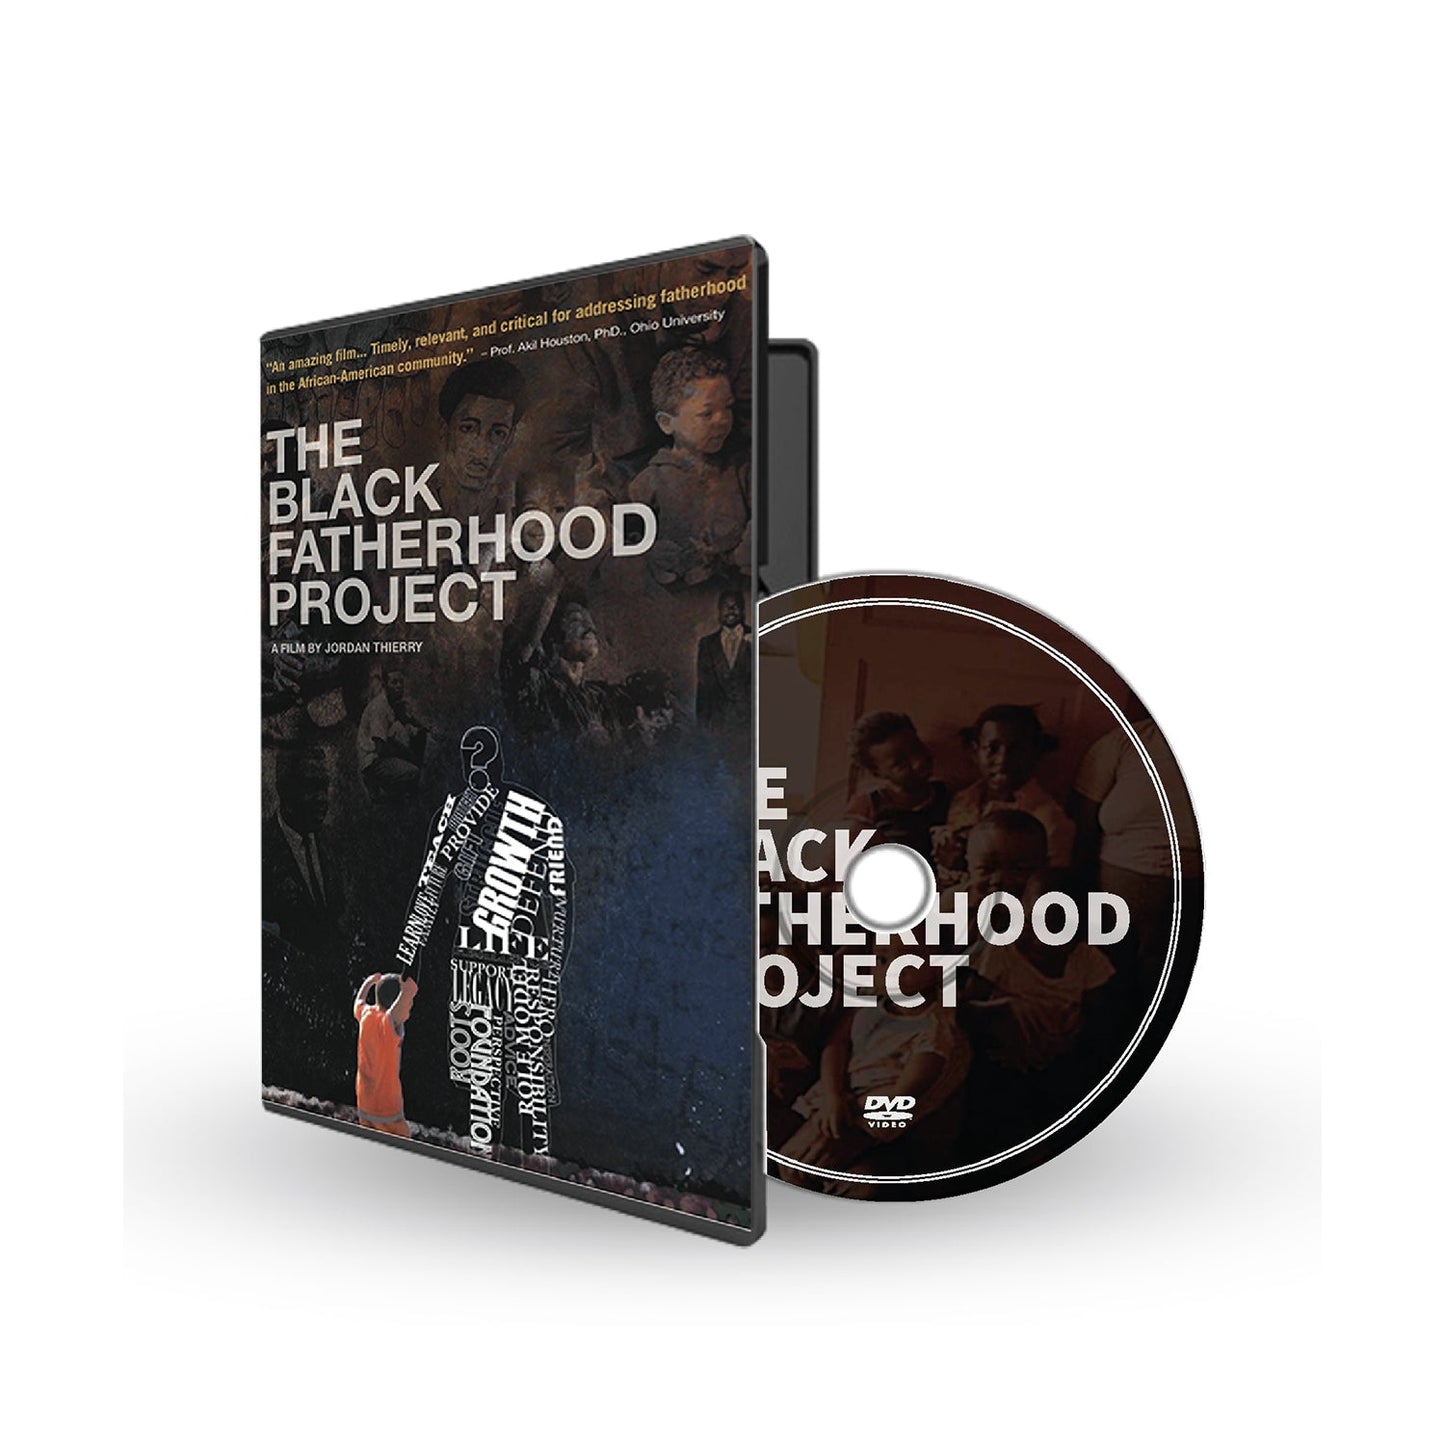 THE BLACK FATHERHOOD PROJECT - DVD